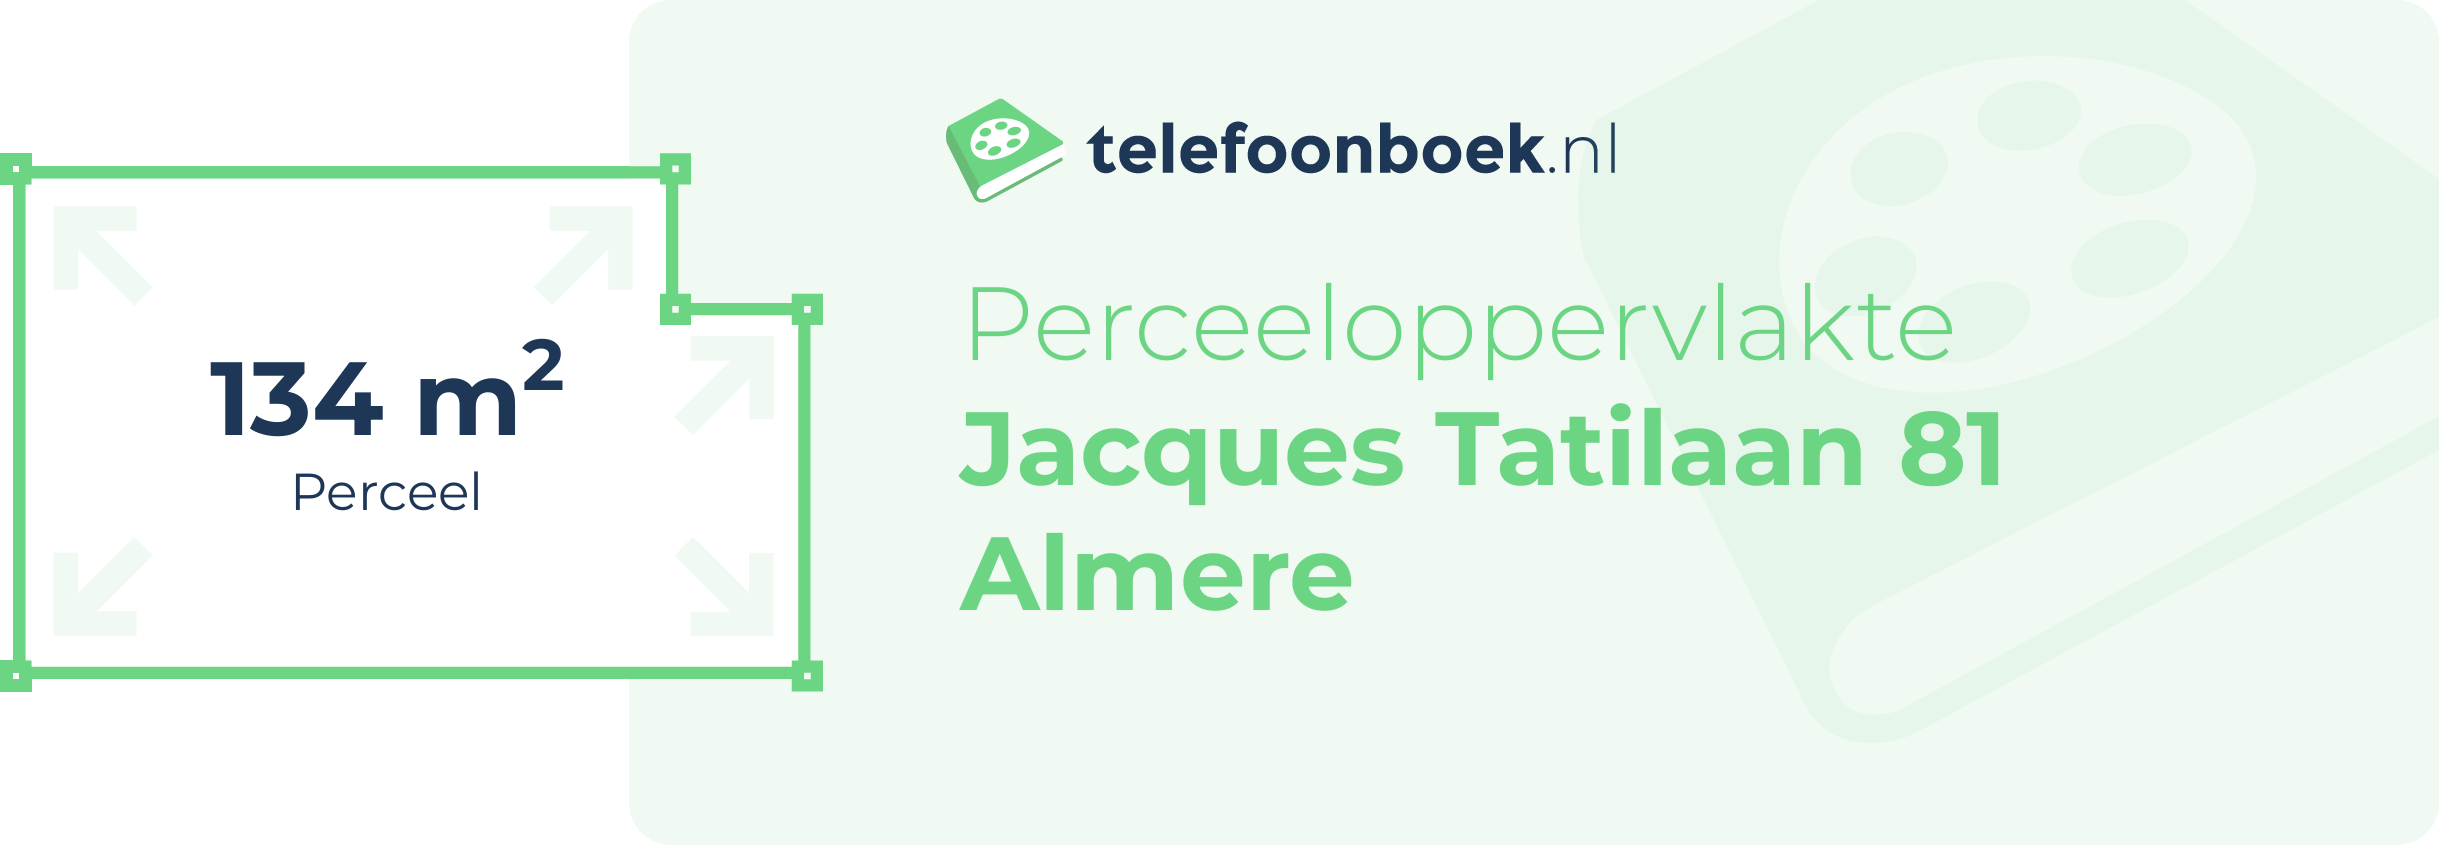 Perceeloppervlakte Jacques Tatilaan 81 Almere